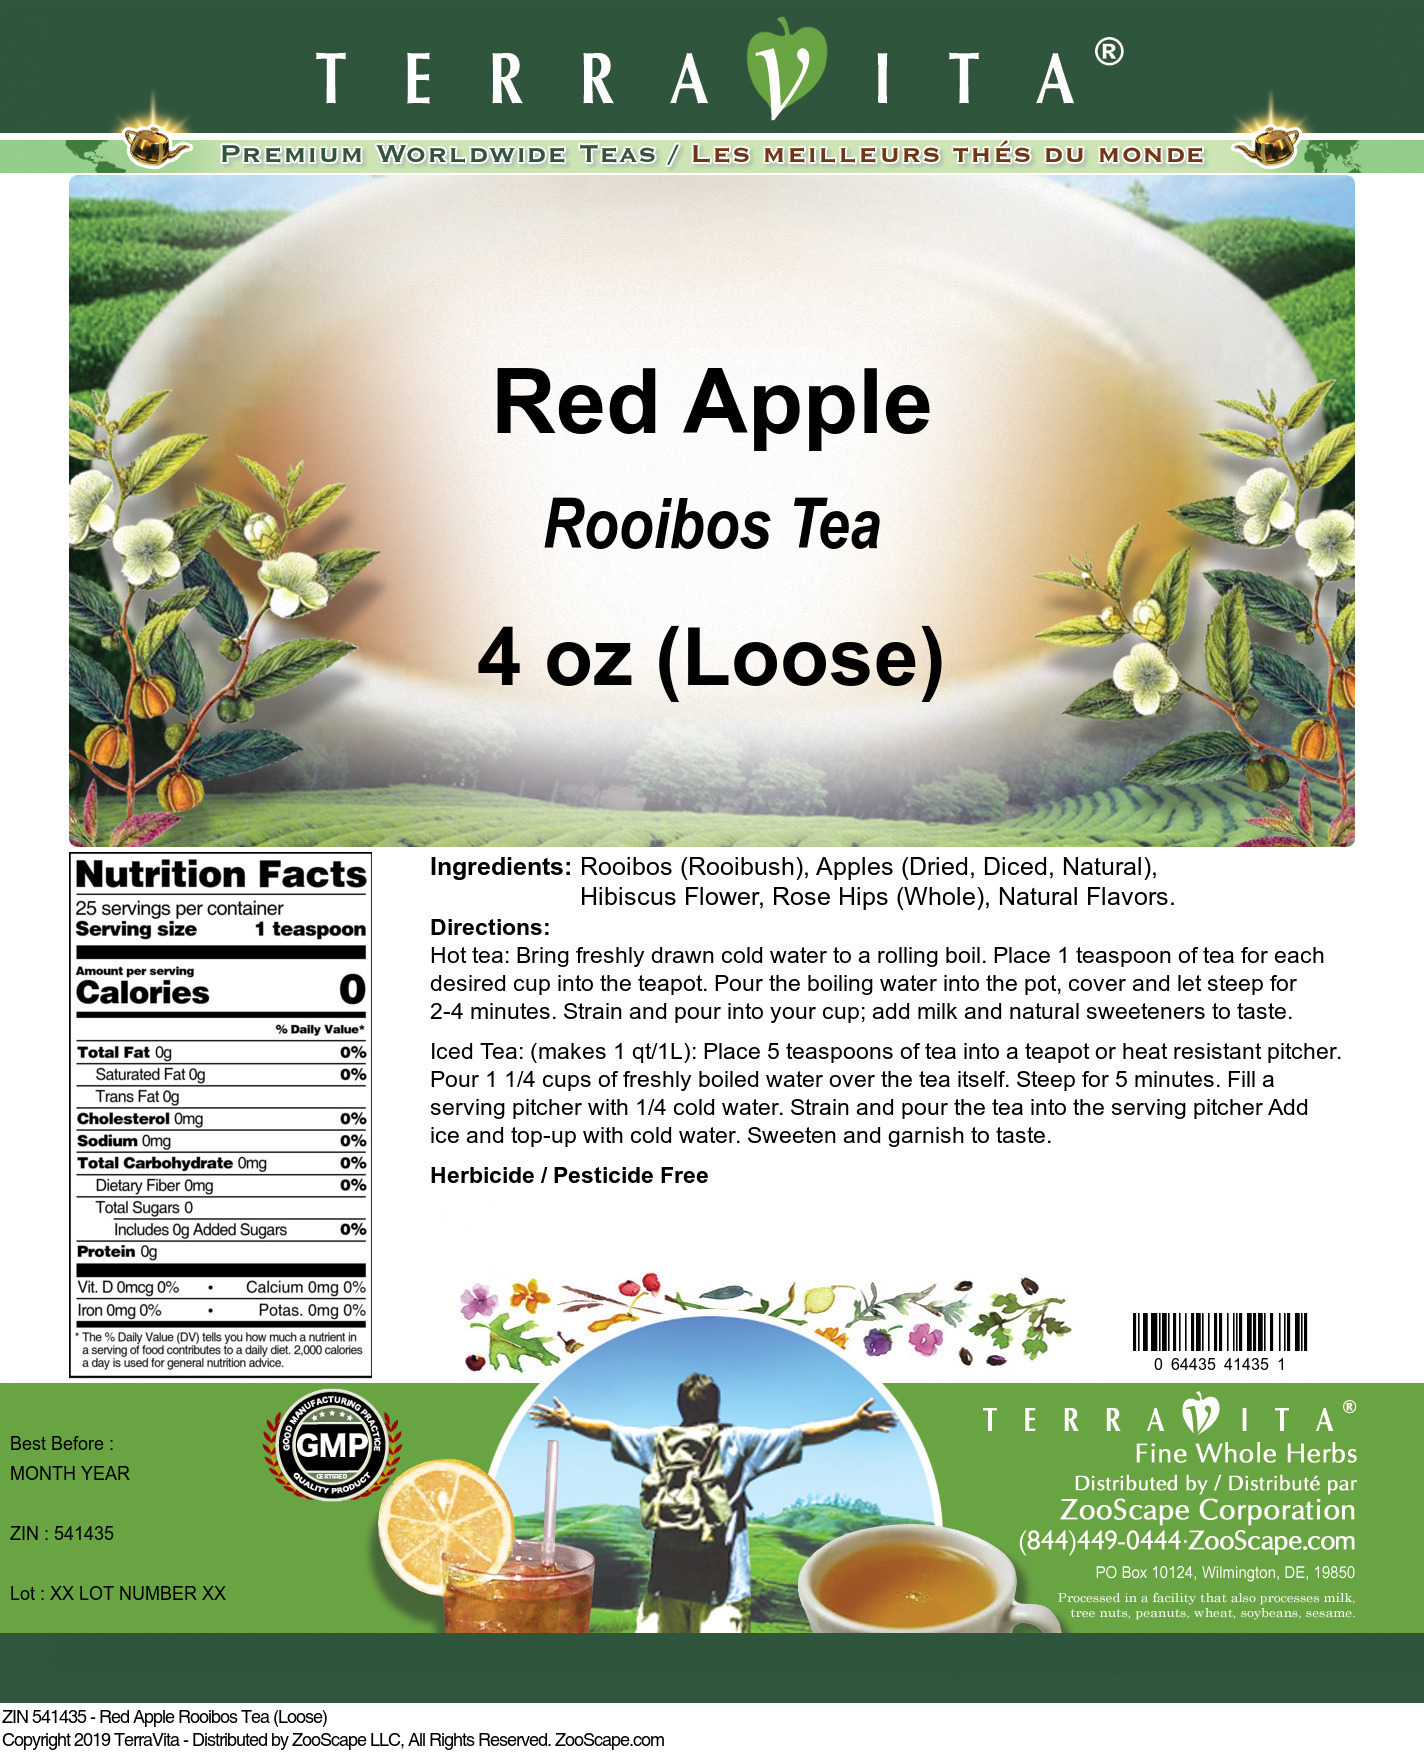 Red Apple Rooibos Tea (Loose) - Label